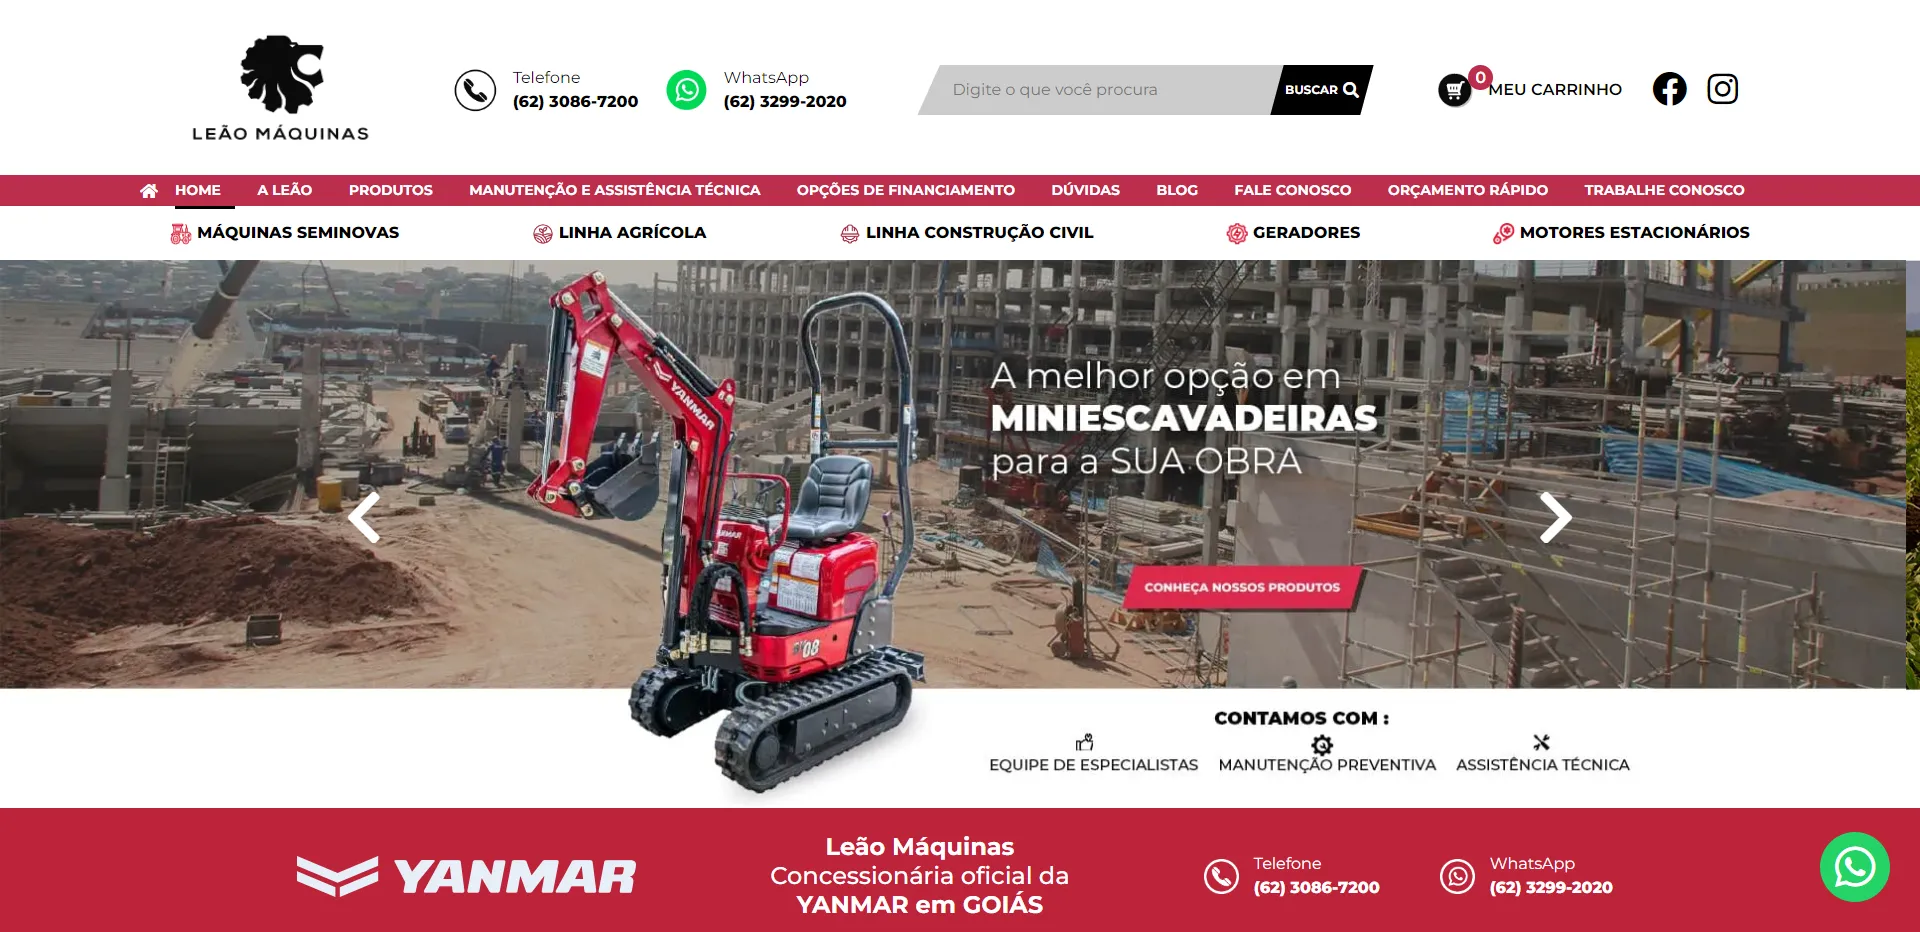 raddar-case-website-leao-maquinas